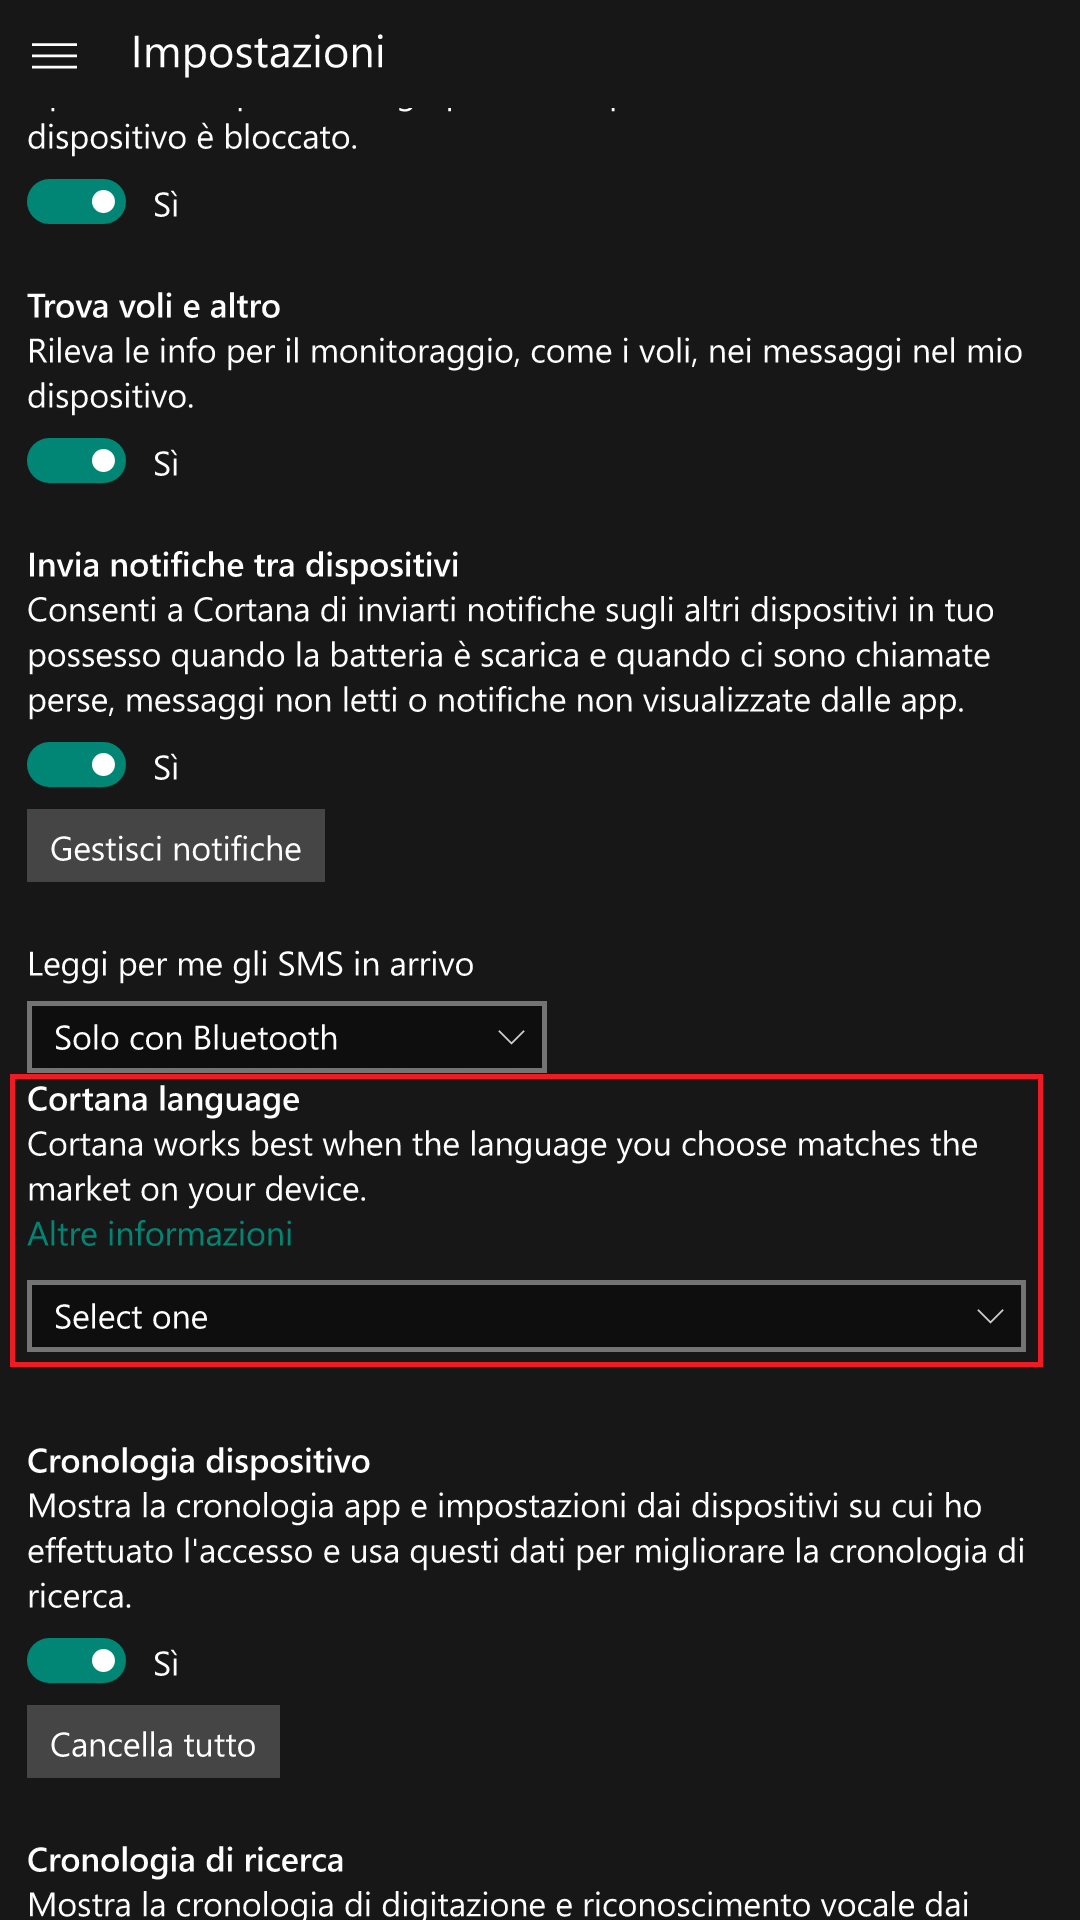 Cortana - Windows 10 Mobile 14332.1001